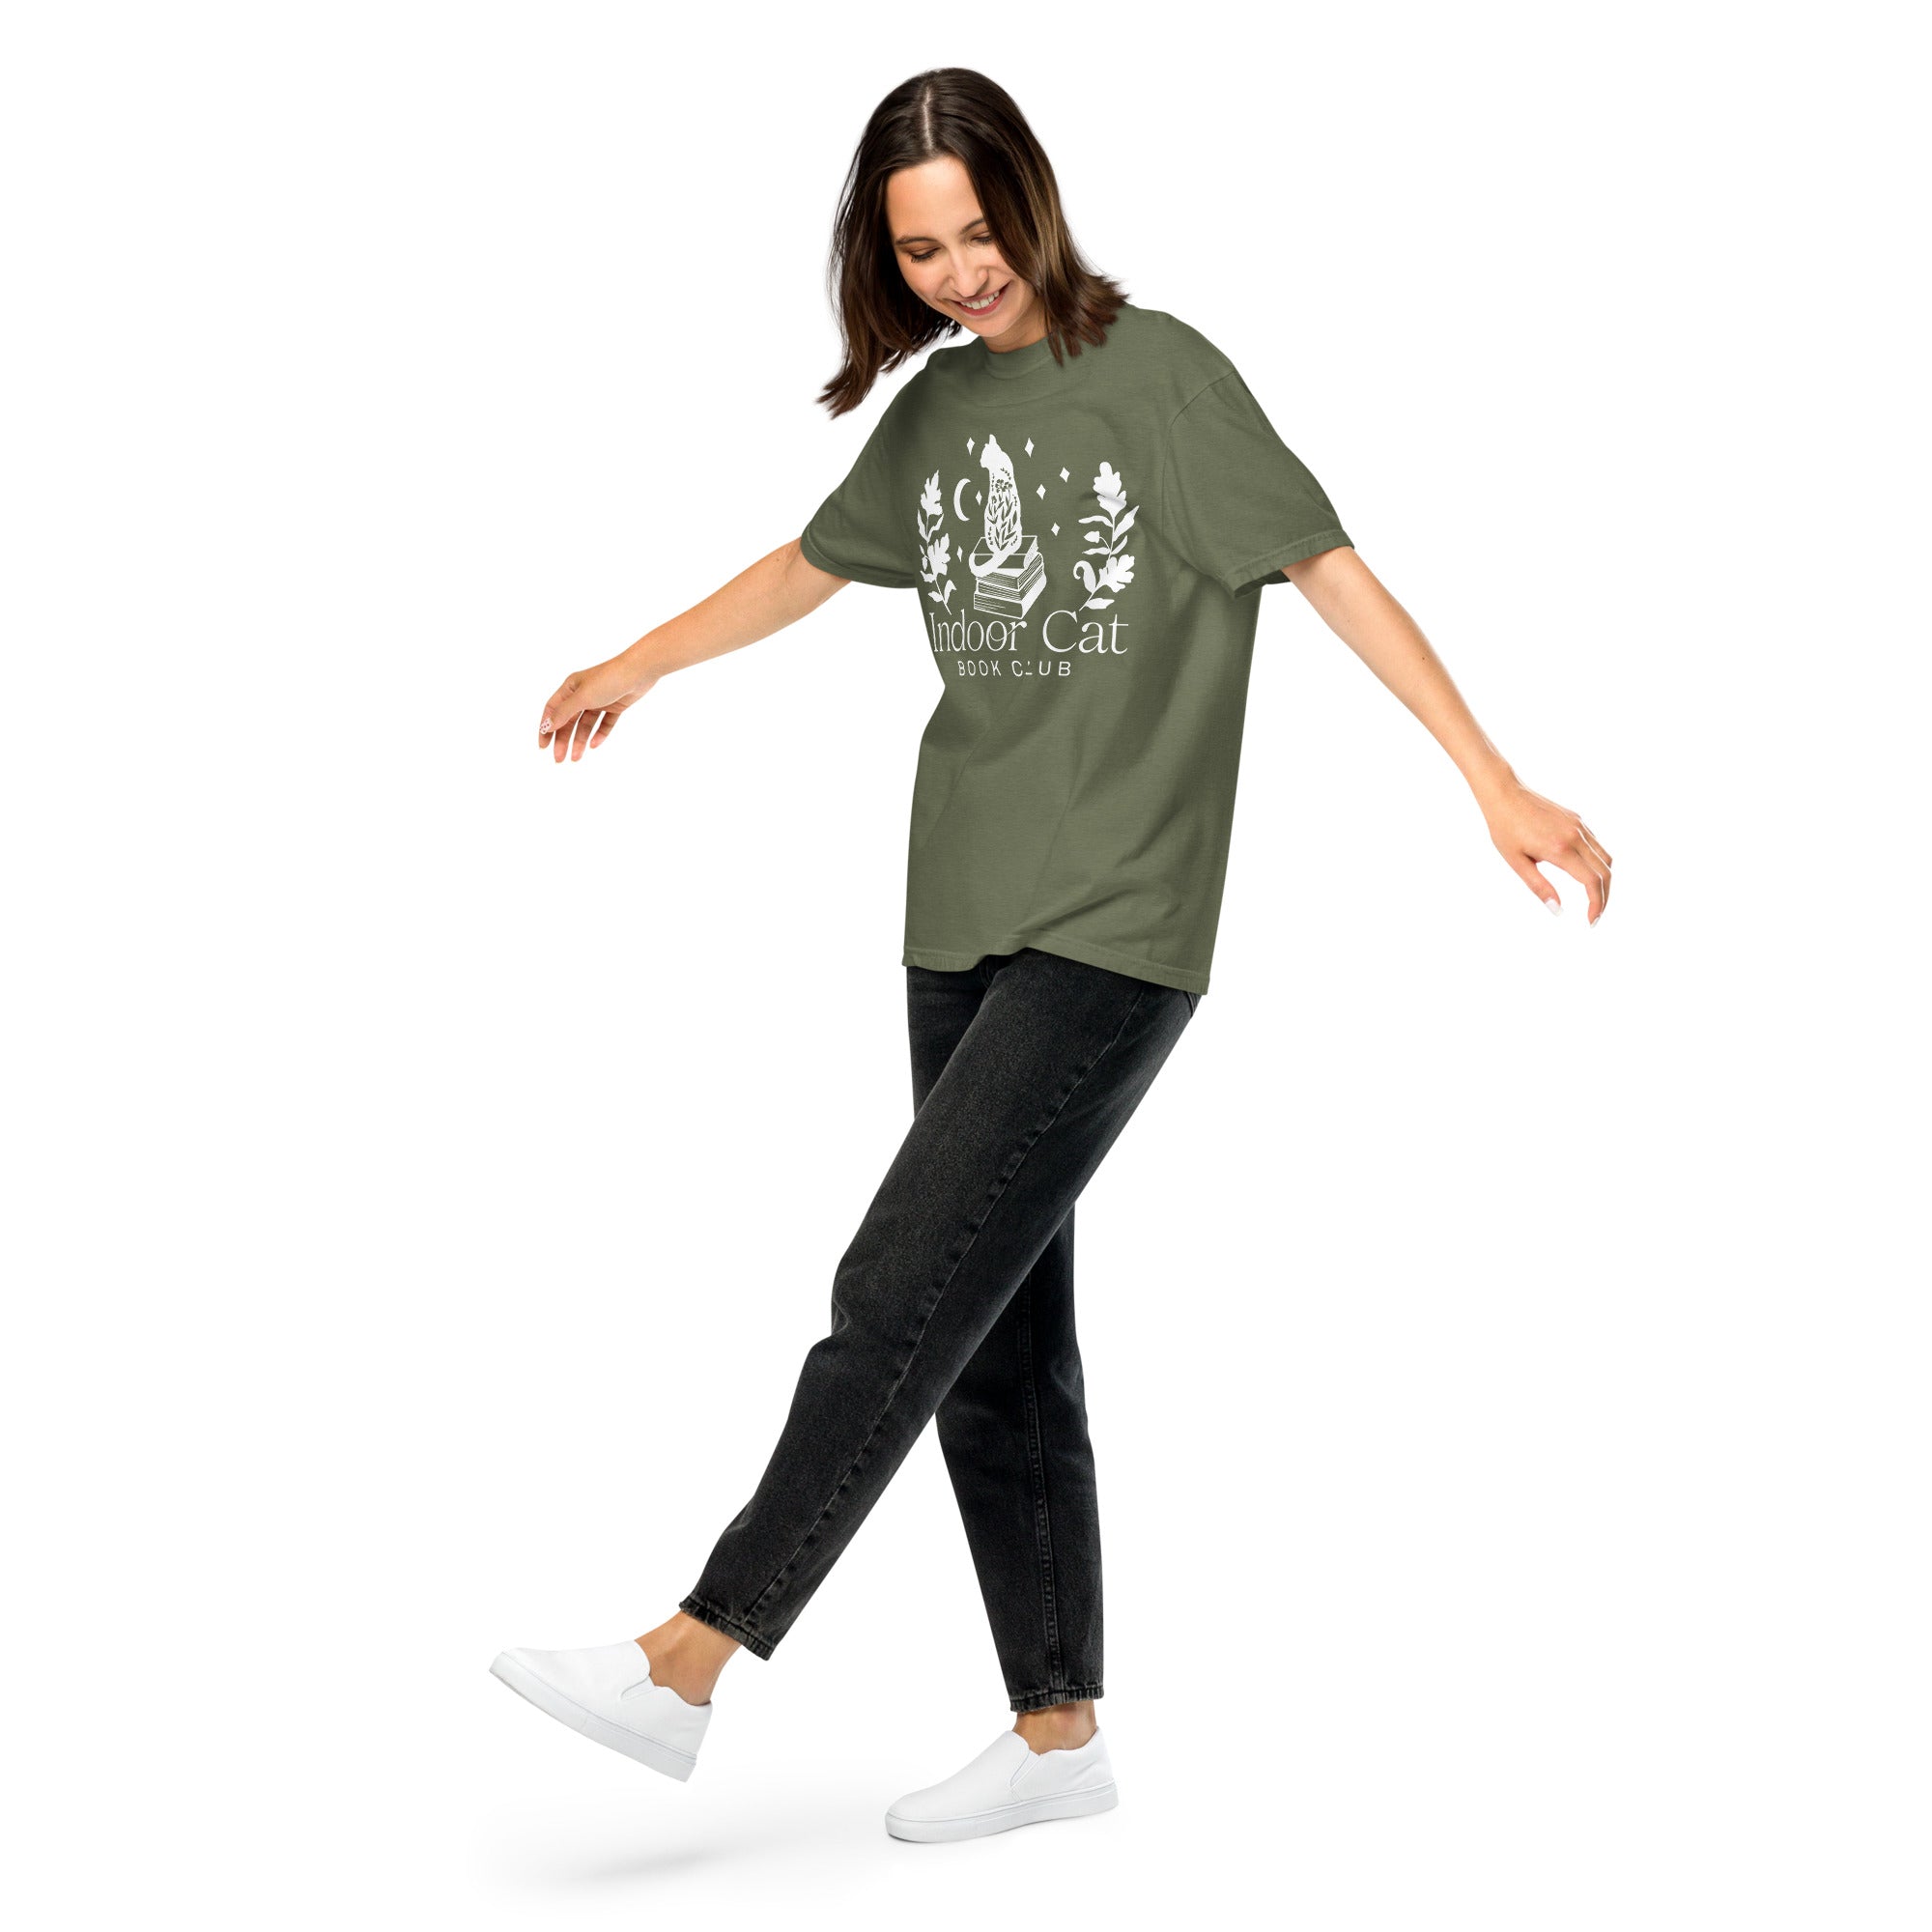 FireDrake Artistry™ Indoor Cat t-shirt, comfort colors brand in moss, white design